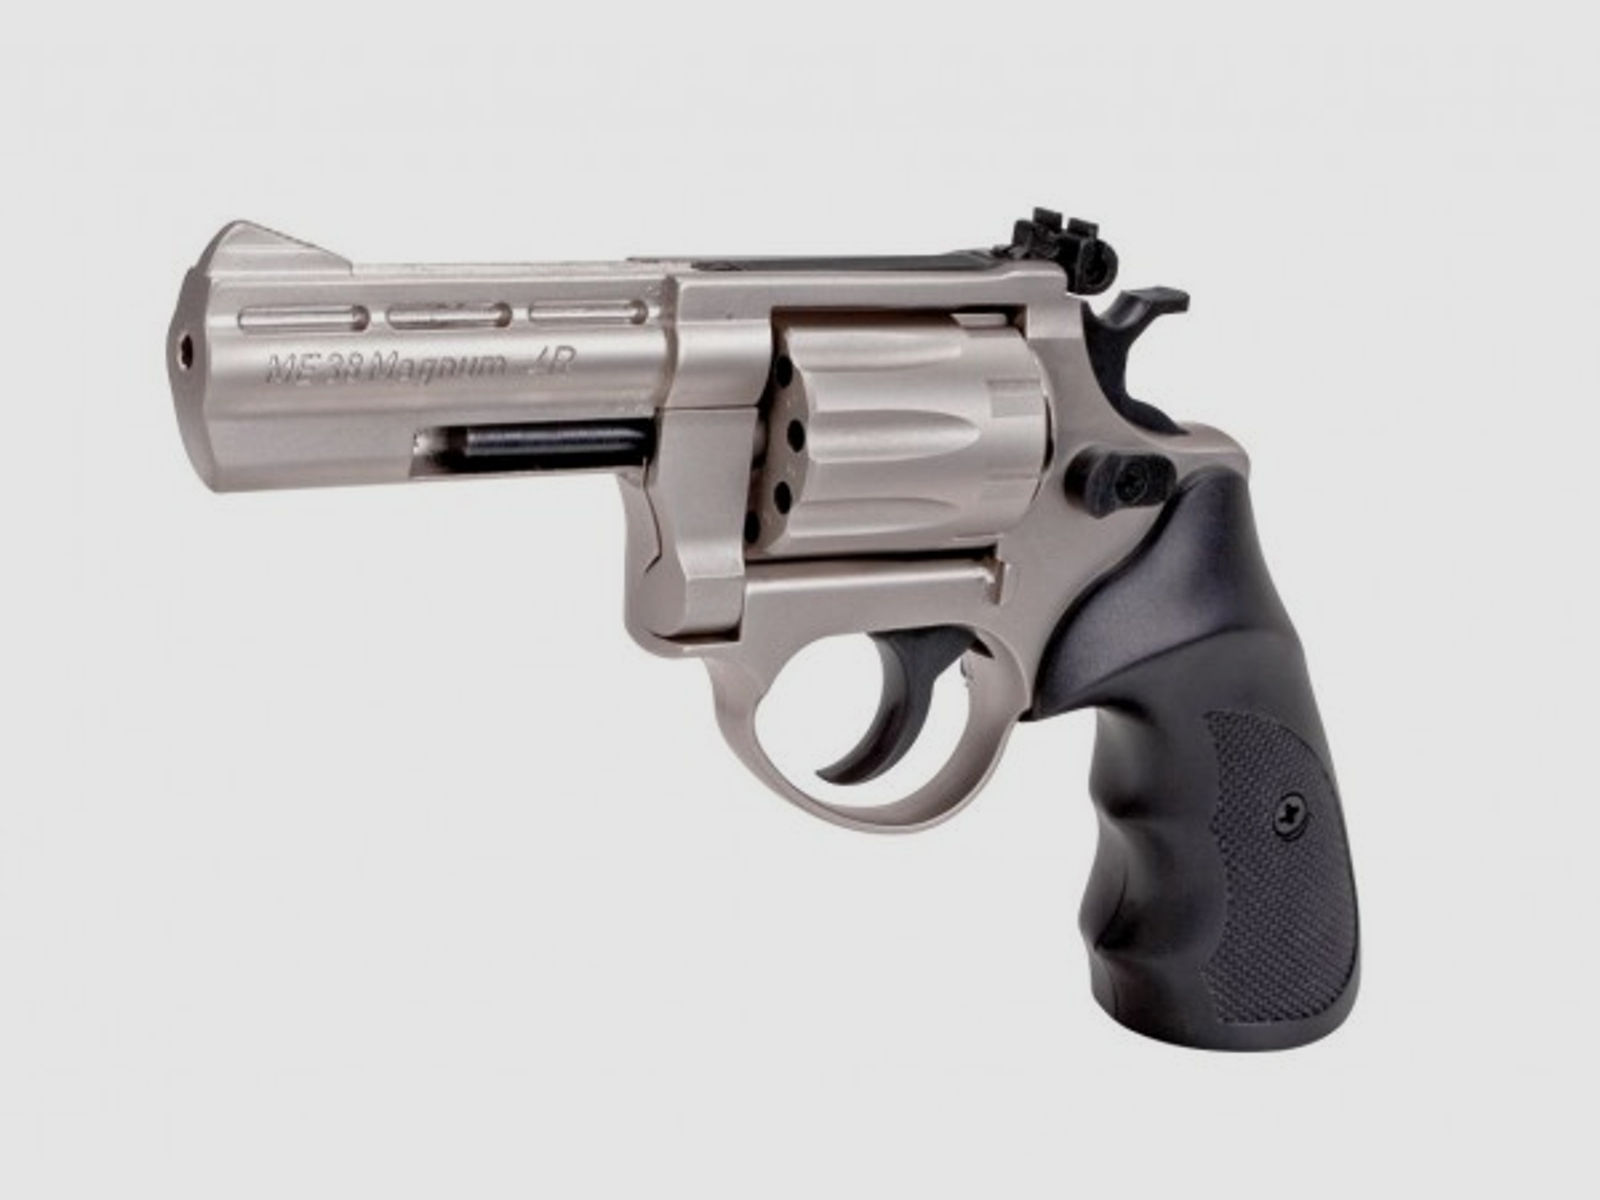 ME 38 Magnum-4R, Kal. 4 mm R lang, nickel